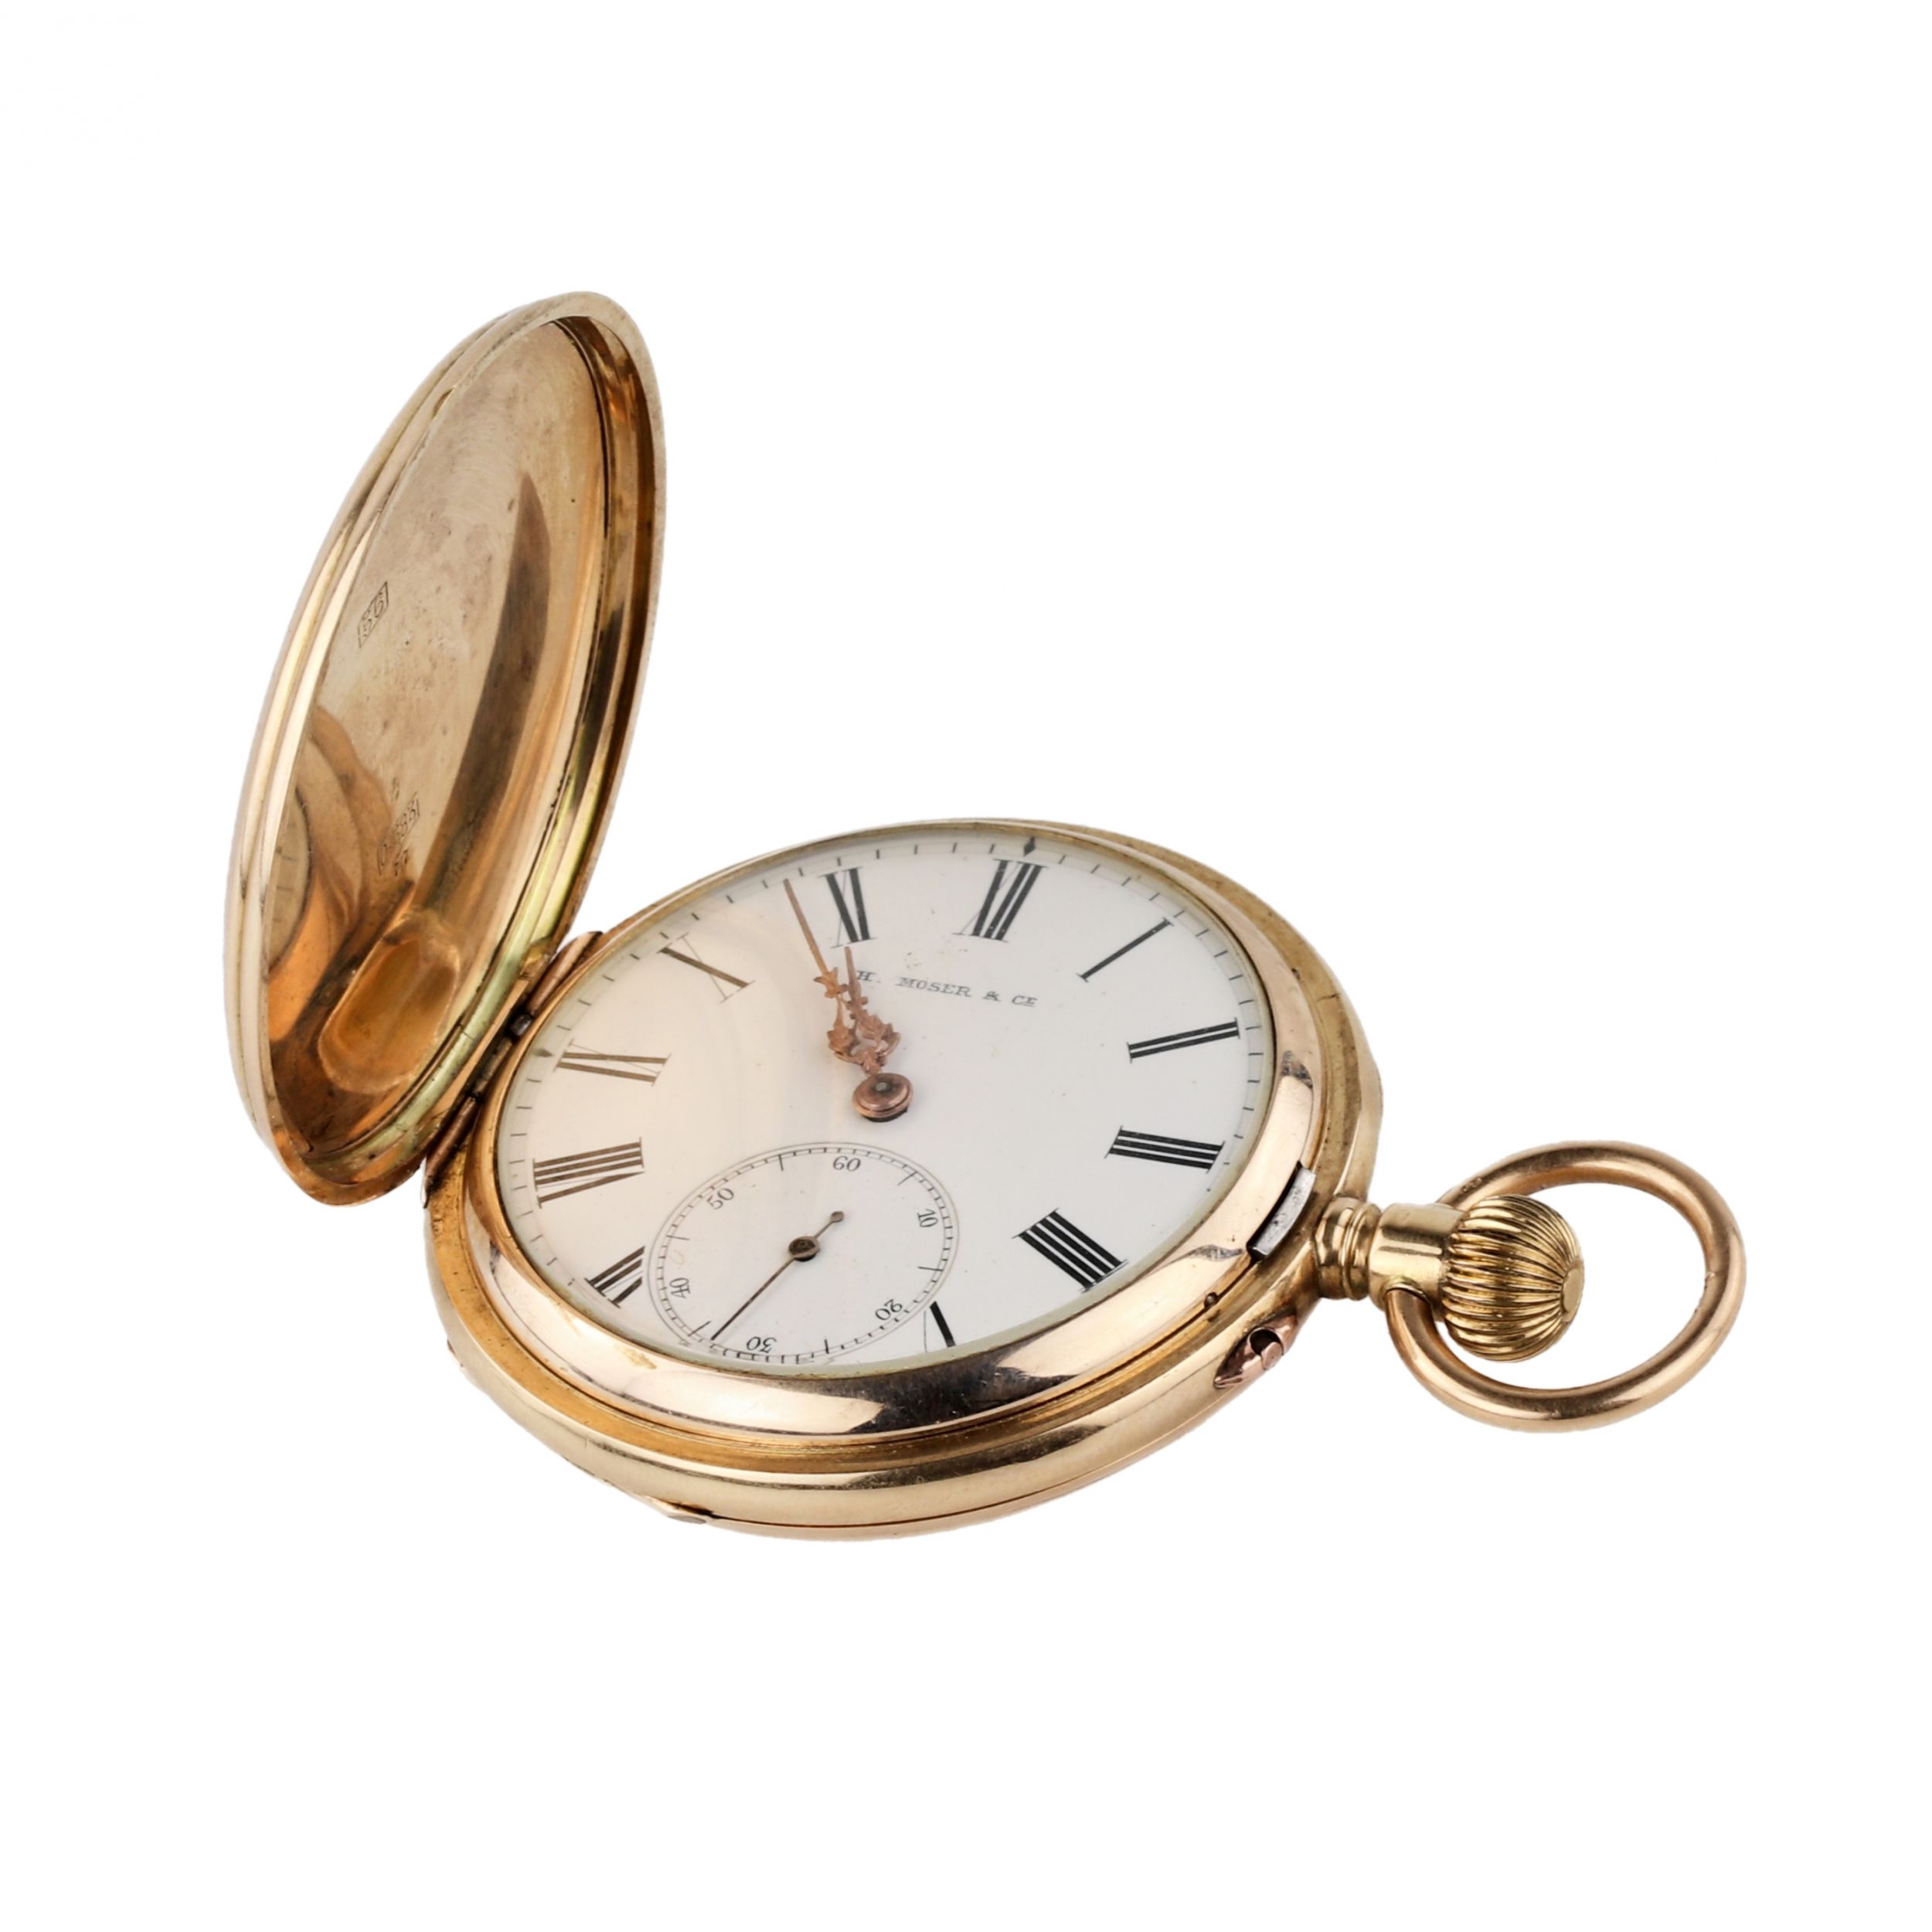 H-MOSER-&-Co-gold-pocket-watch-circa-1900-